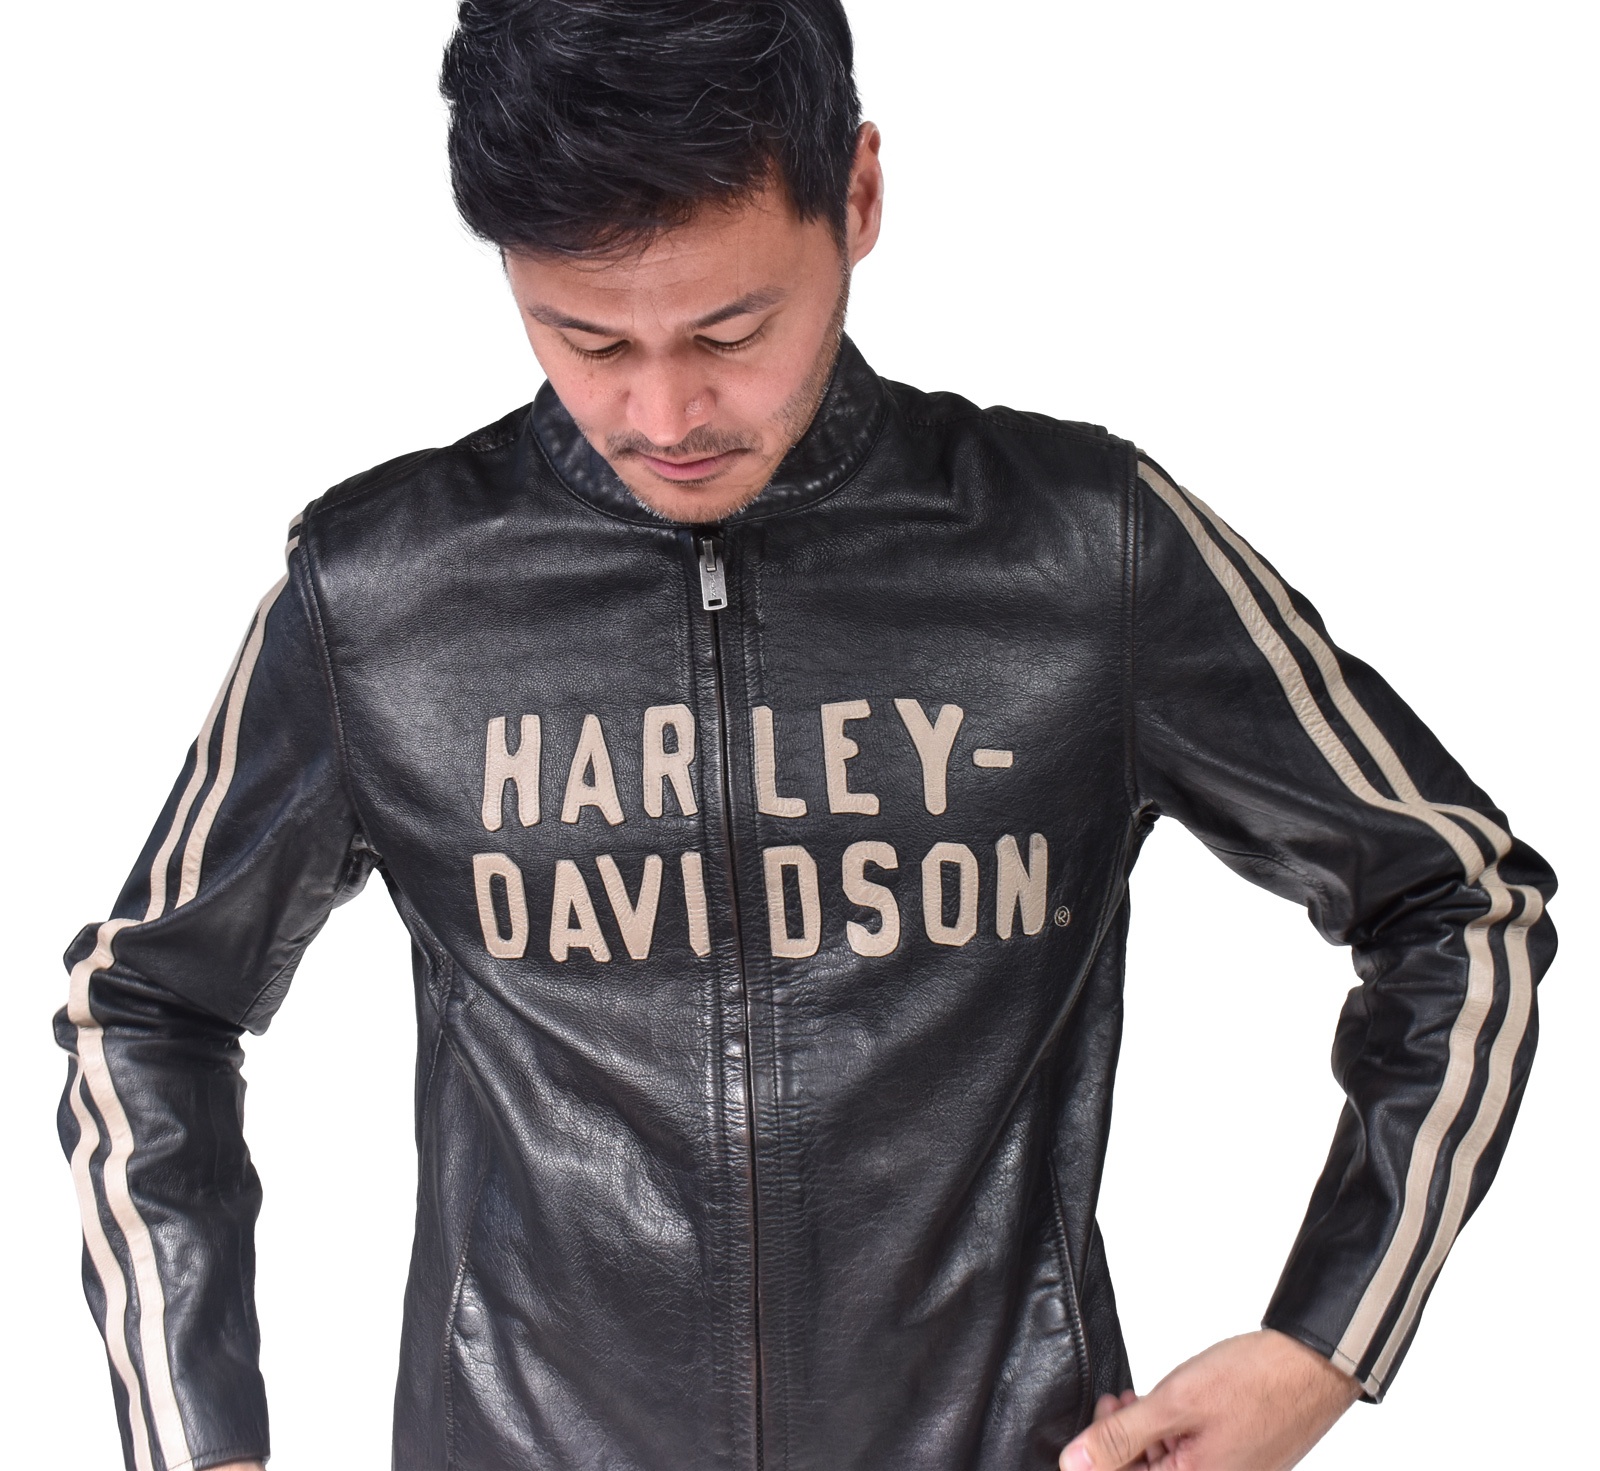 97009 21vm Harley Davidson Men S Leather Jacket Sleeve Stripe At Thunderbike Shop